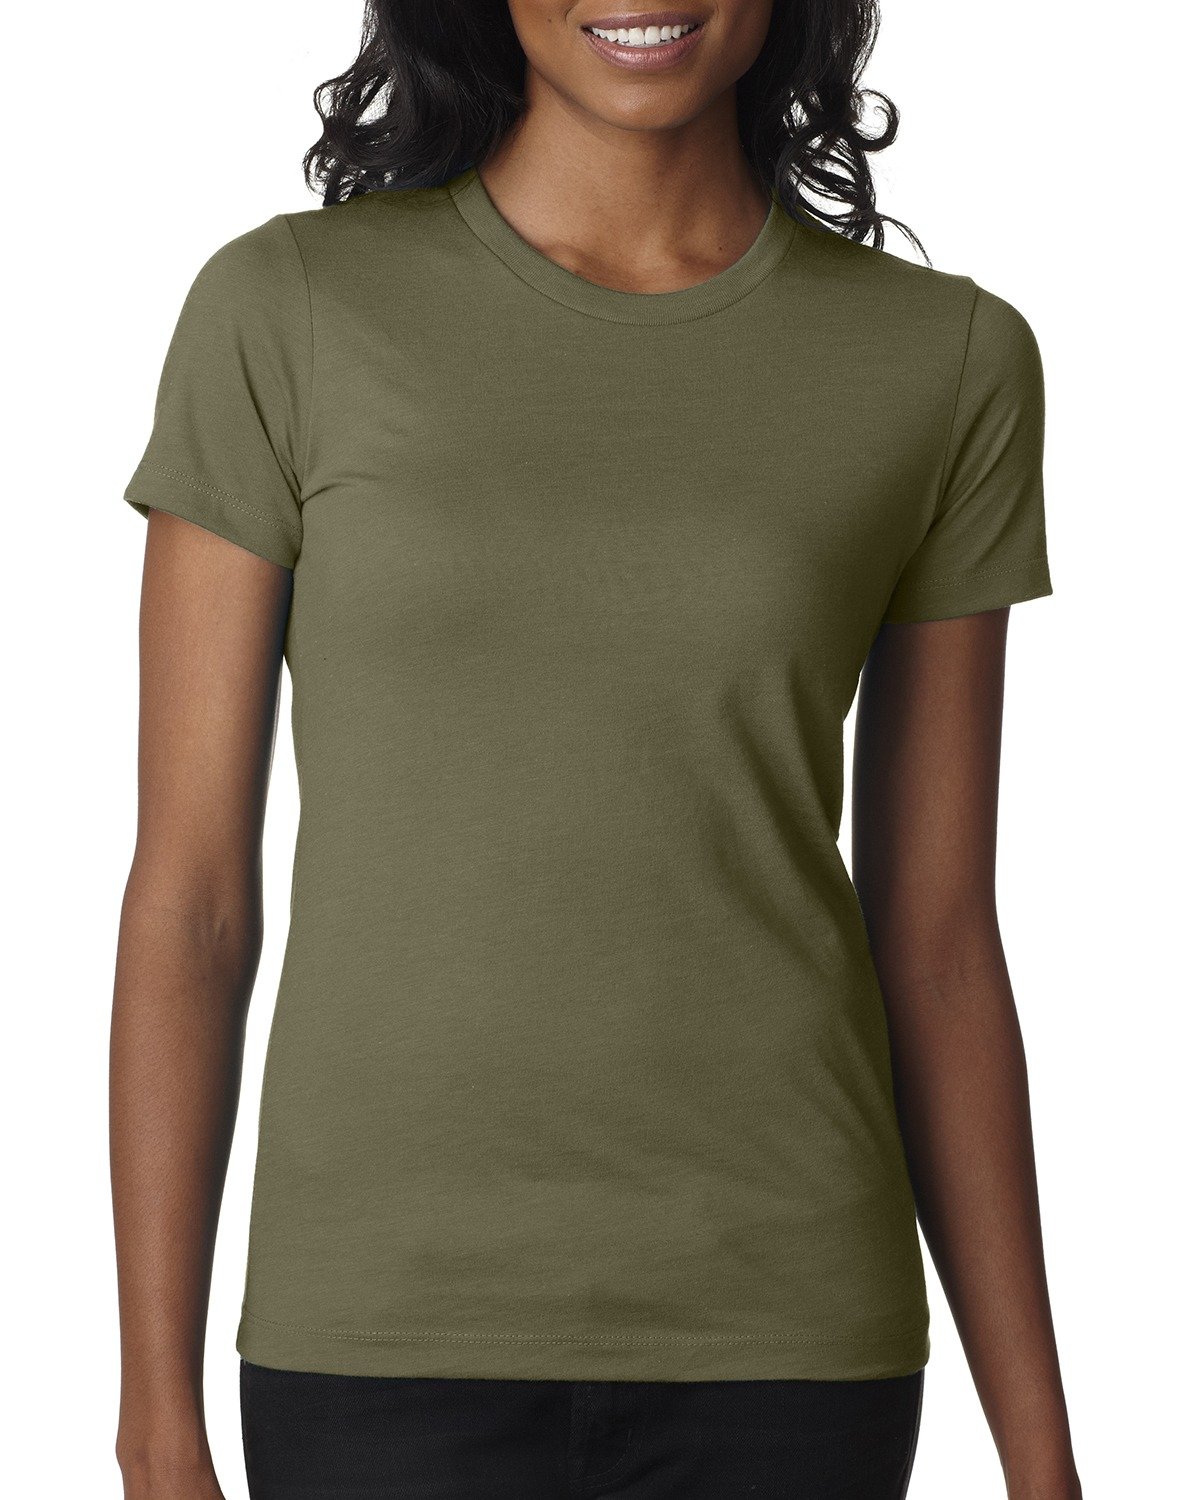 Next Level Ladies' CVC T-Shirt MILITARY GREEN 